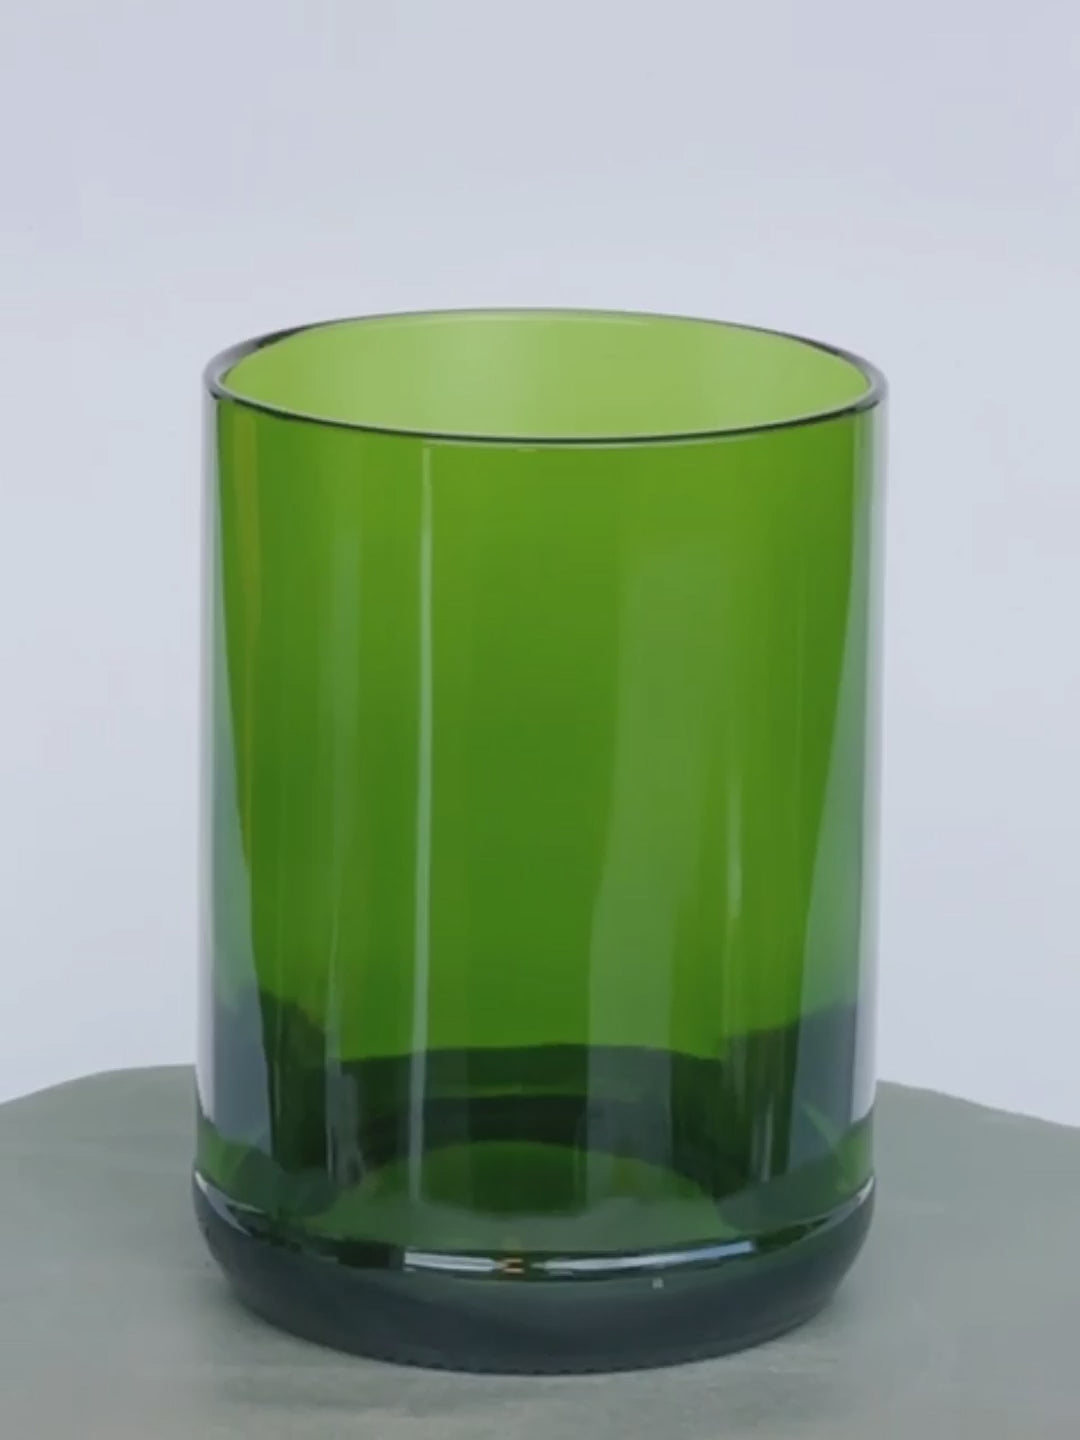 14oz Green Repurposed Drinking Glass